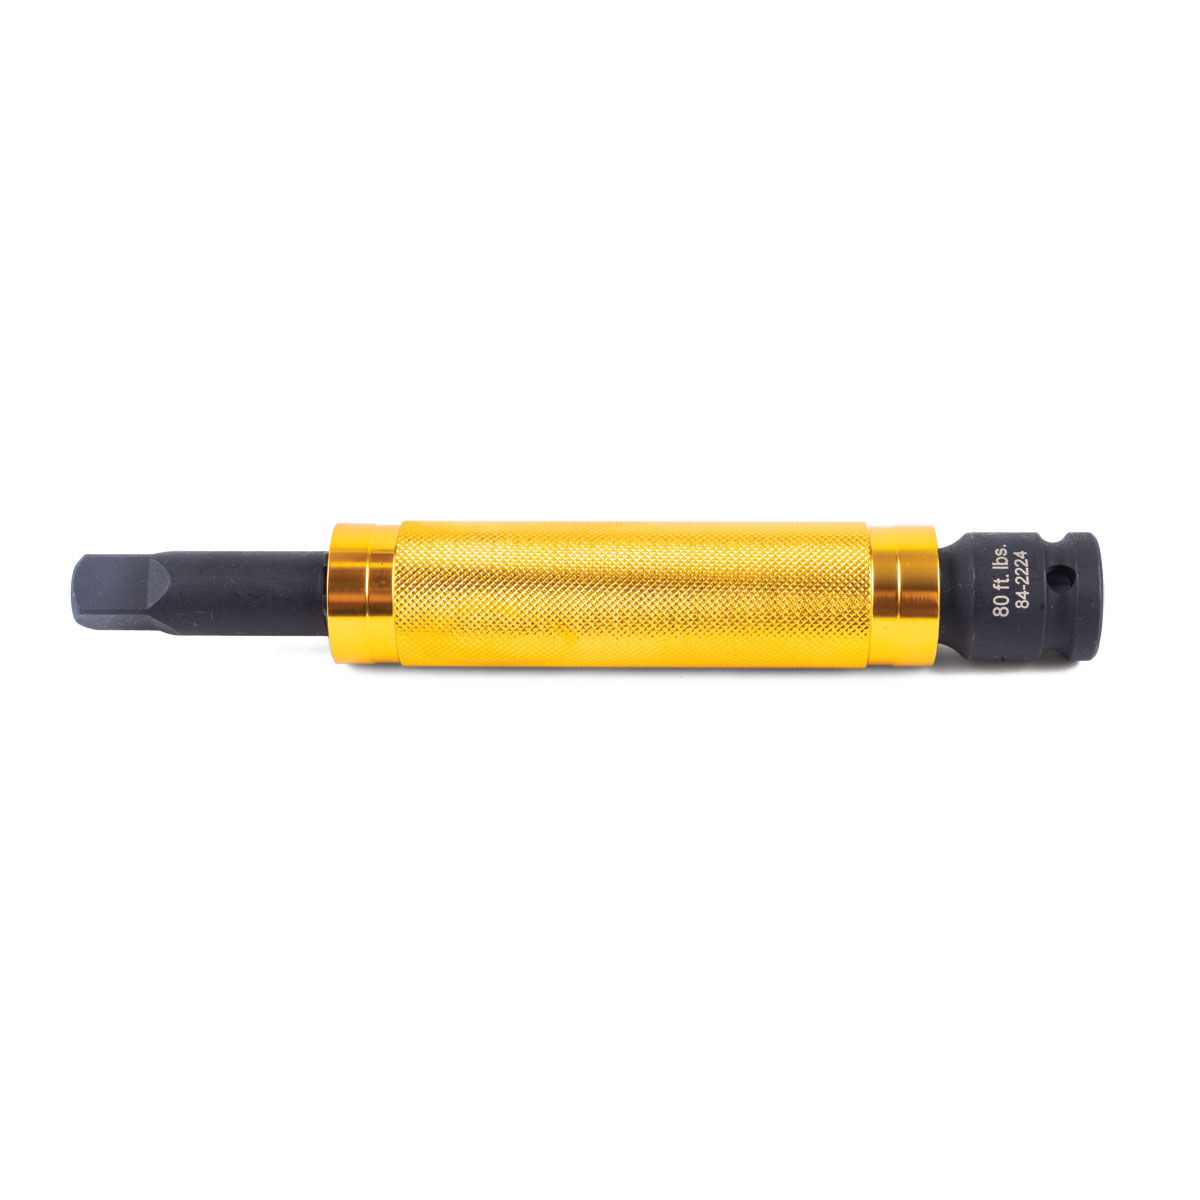 80 Ft-Lb. Yellow Torque Limiting Socket Extension